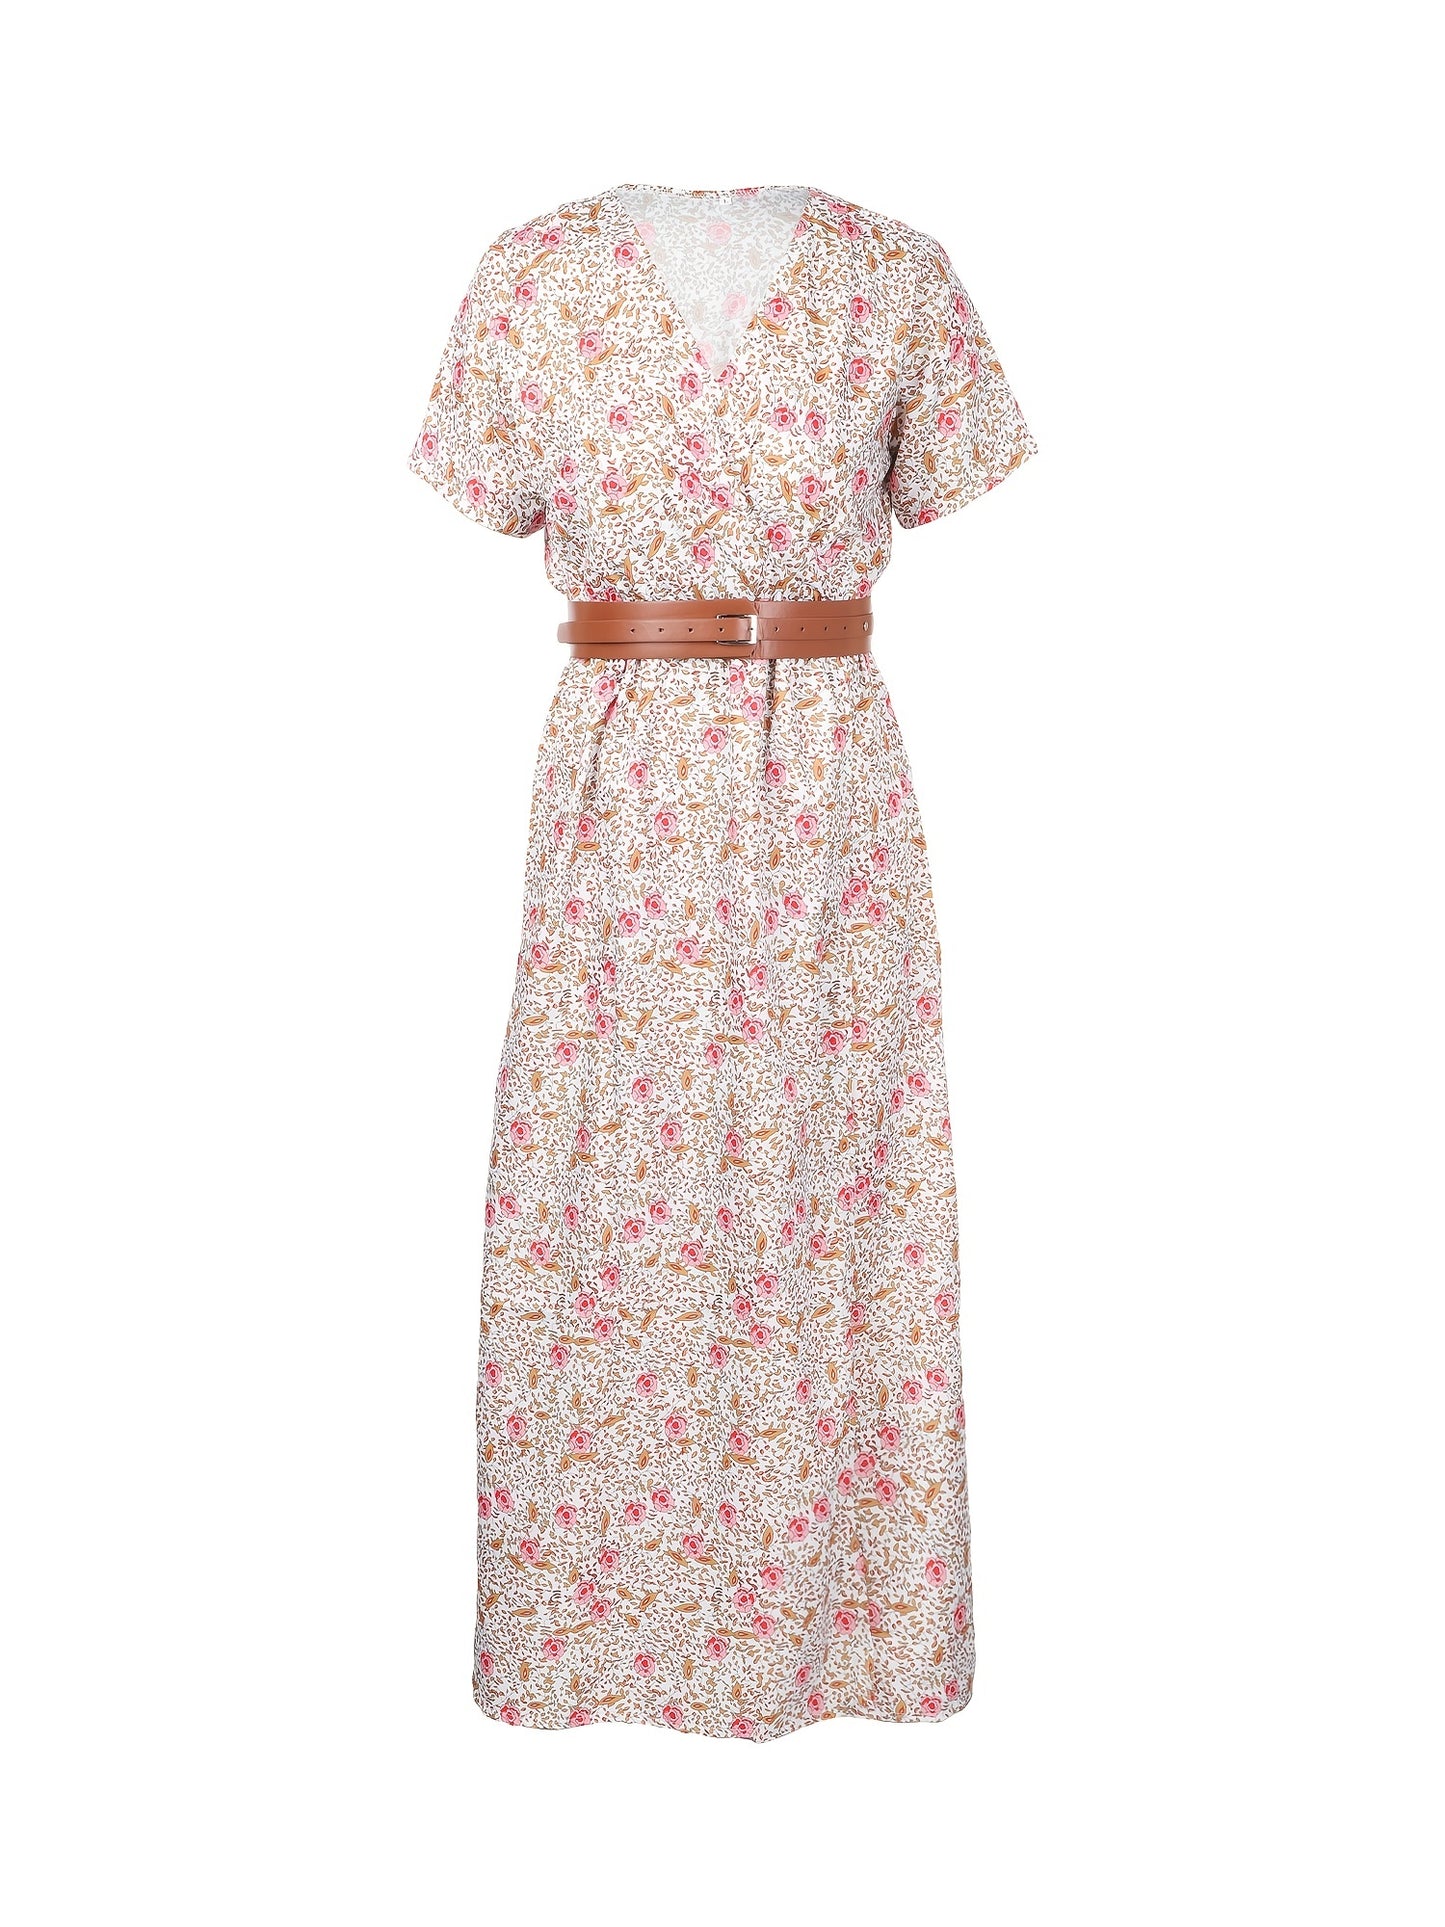 VzyzvBoho Floral Print Dress, V Neck Short Sleeve Belted Maxi Dress, Women's Clothing